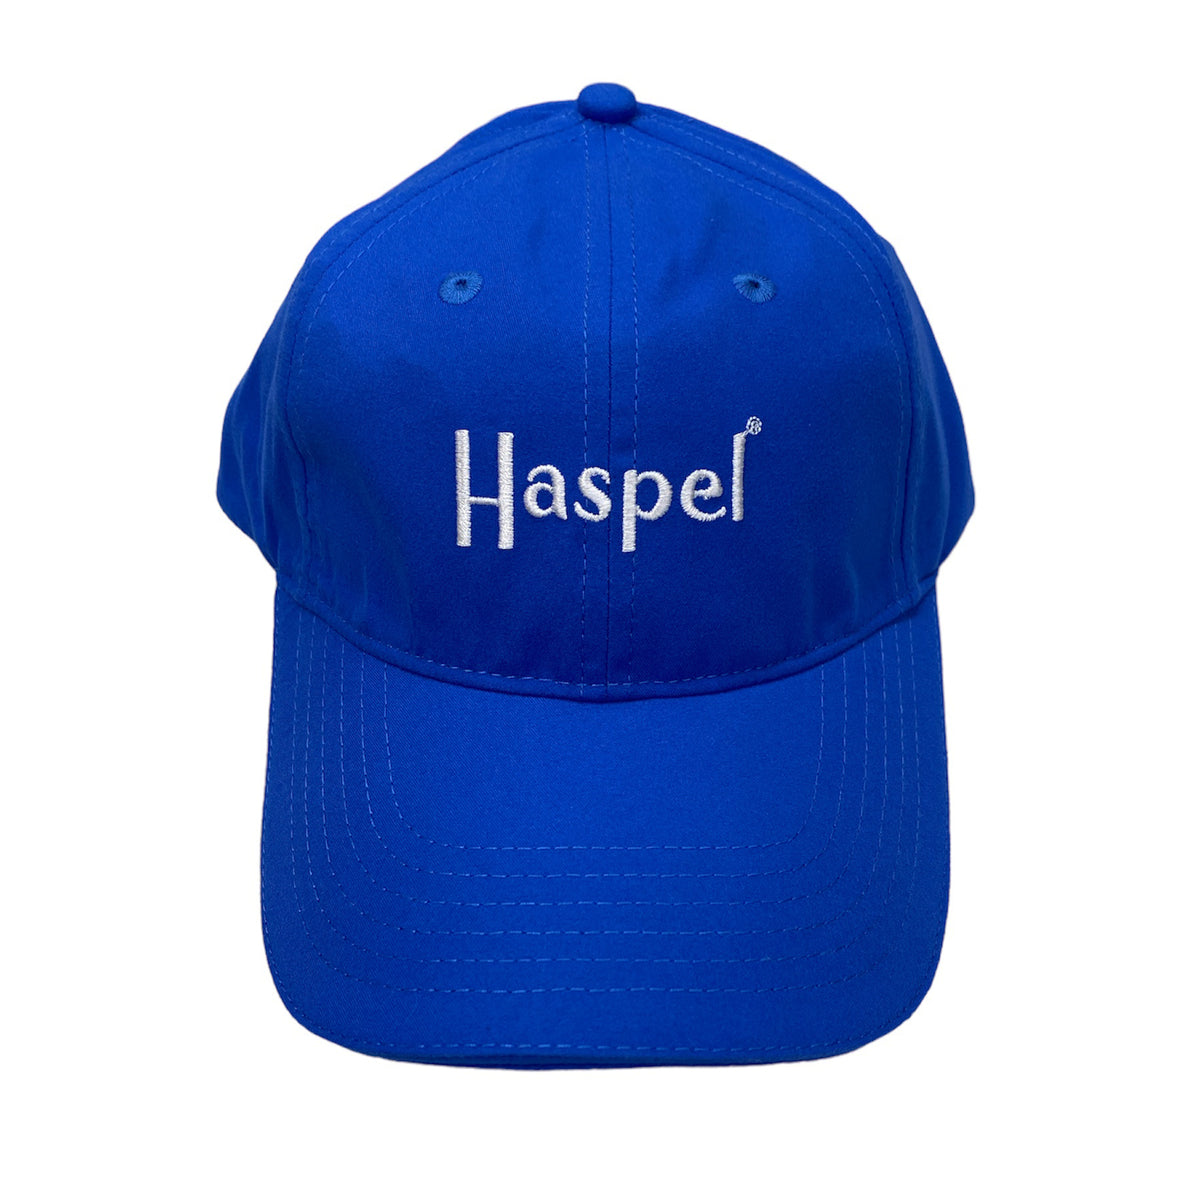 Haspel Performance Hat - Blue